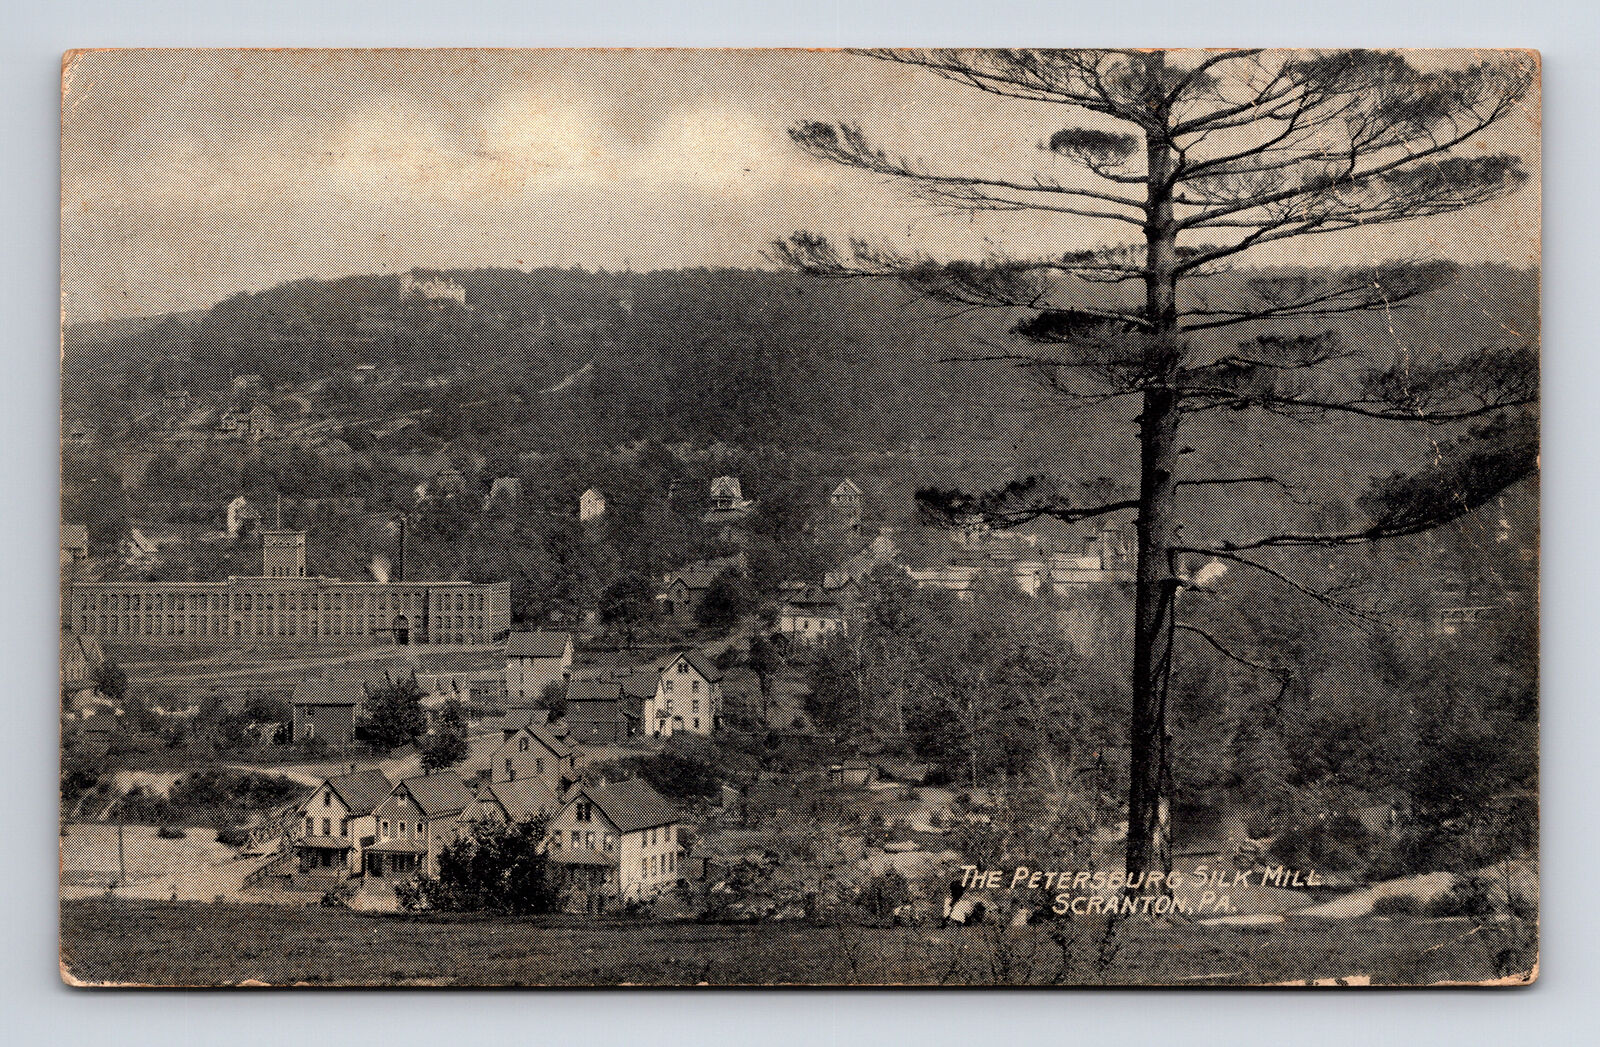 1910 Scenic View of Petersburg Silk Mill Factory Scranton PA G V Millar Postcard